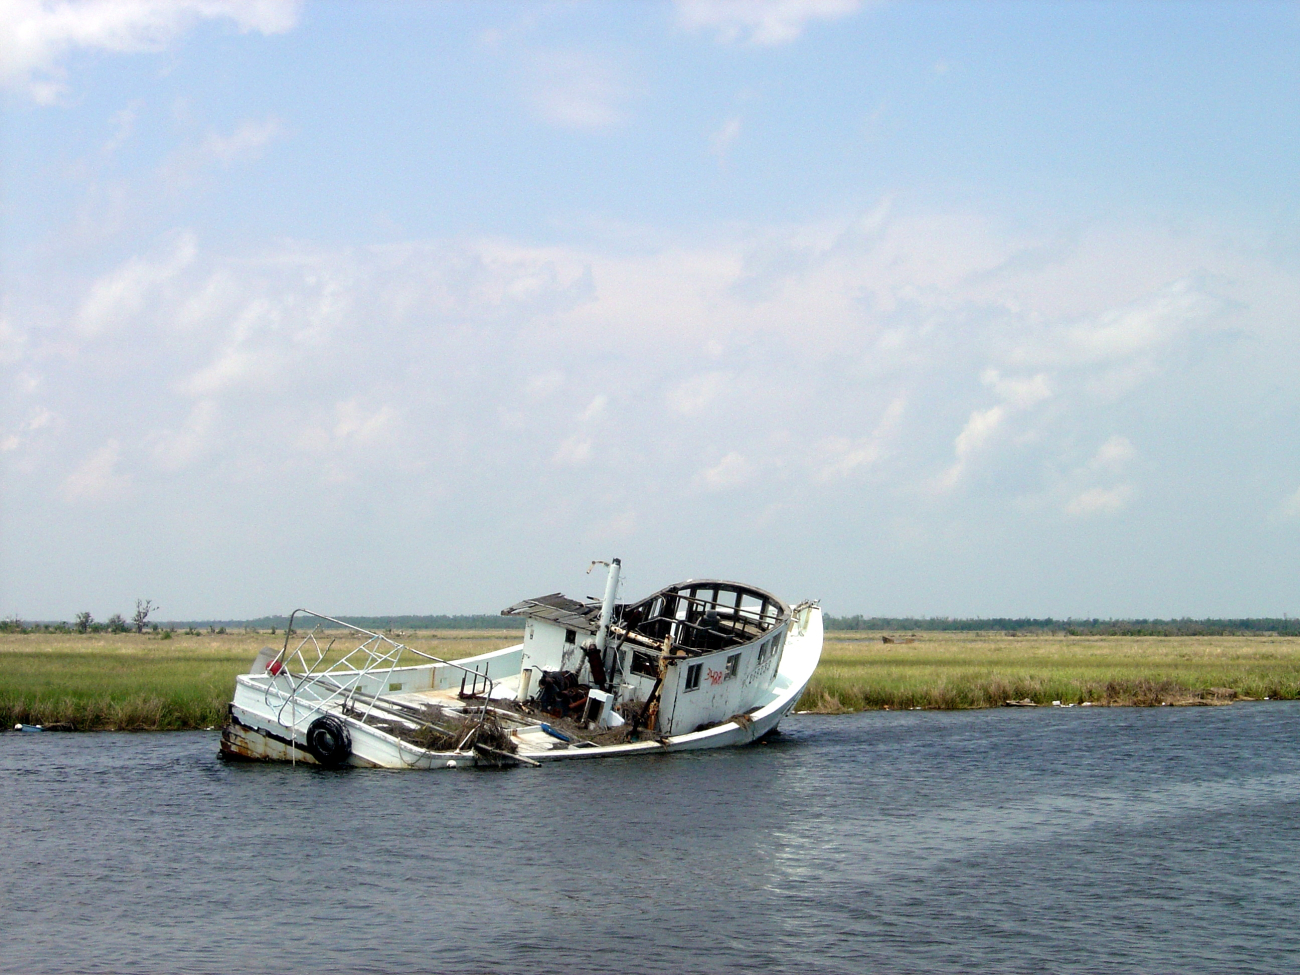 A derelict shrimp vessel stranded in the marsh following Hurricane Katrina